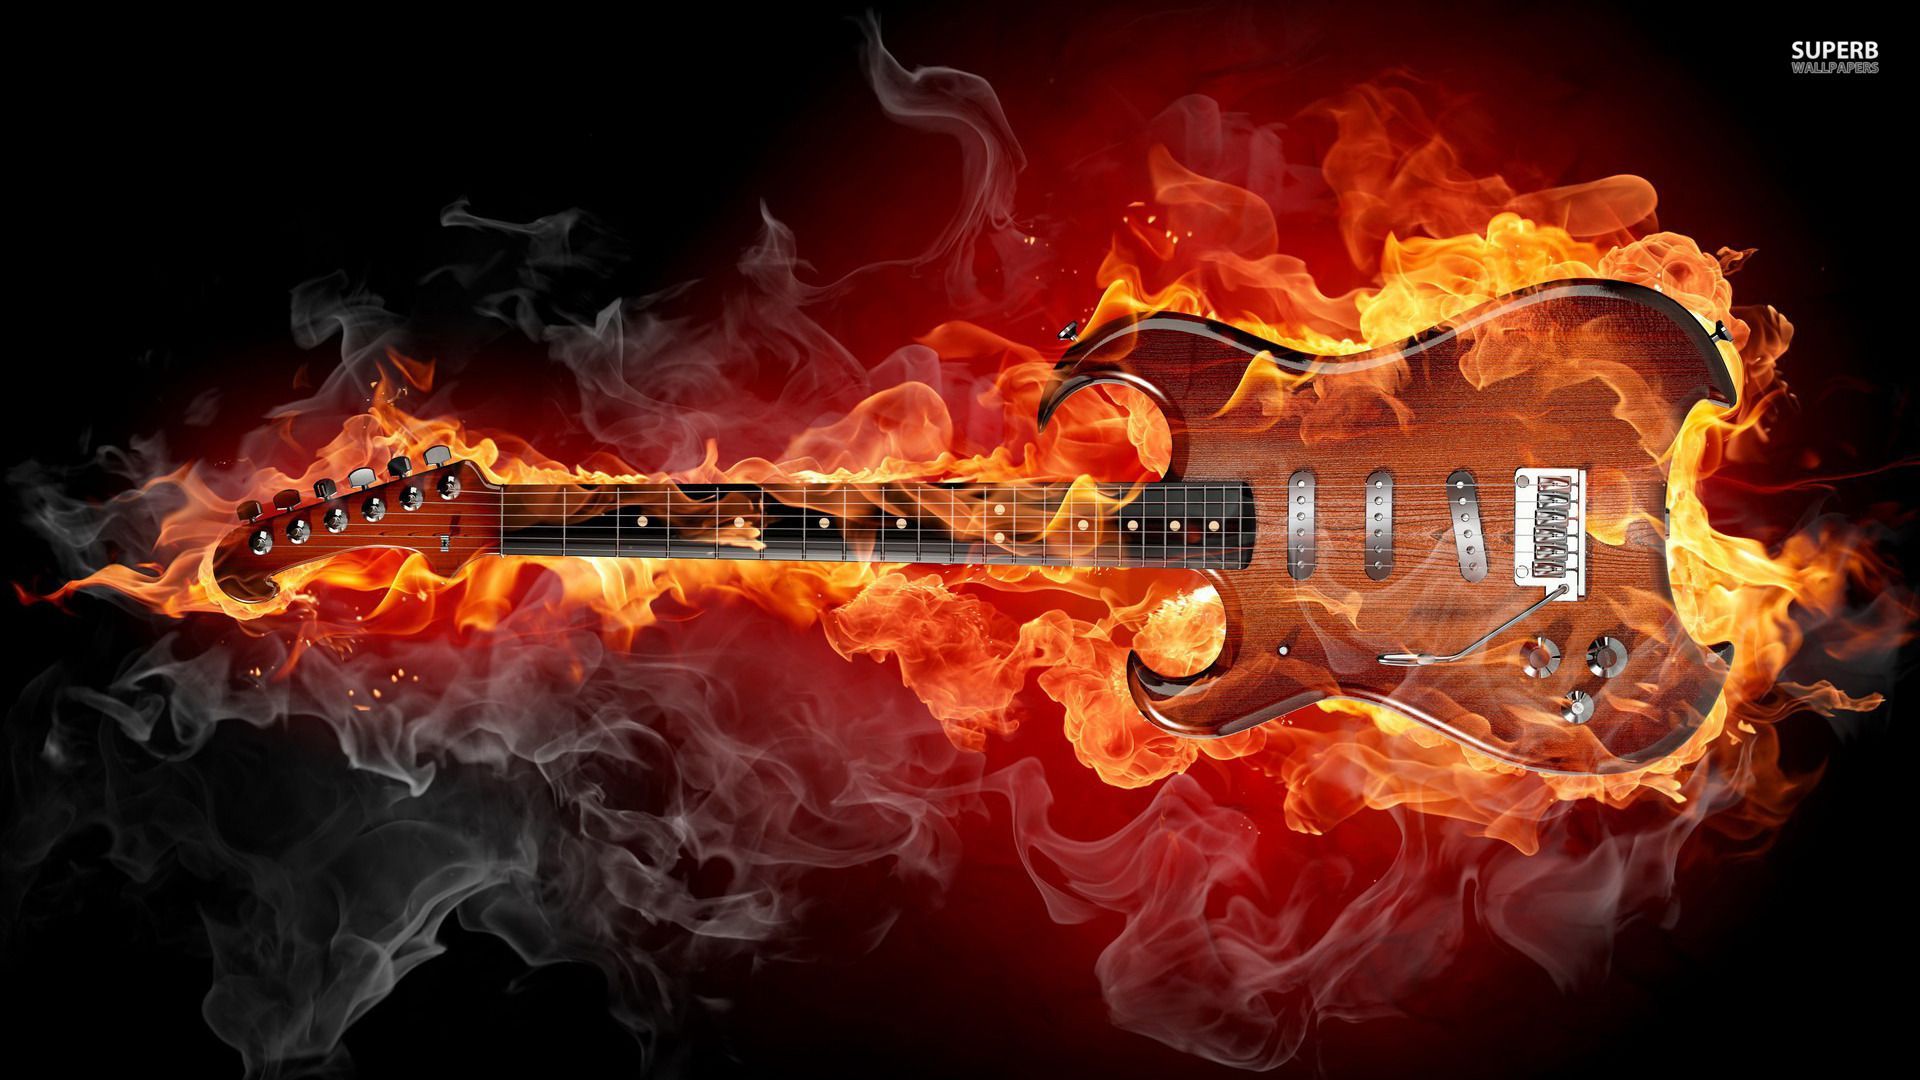 Flaming guitar wallpaper. Music wallpaper, HD wallpaper, Metallic wallpaper